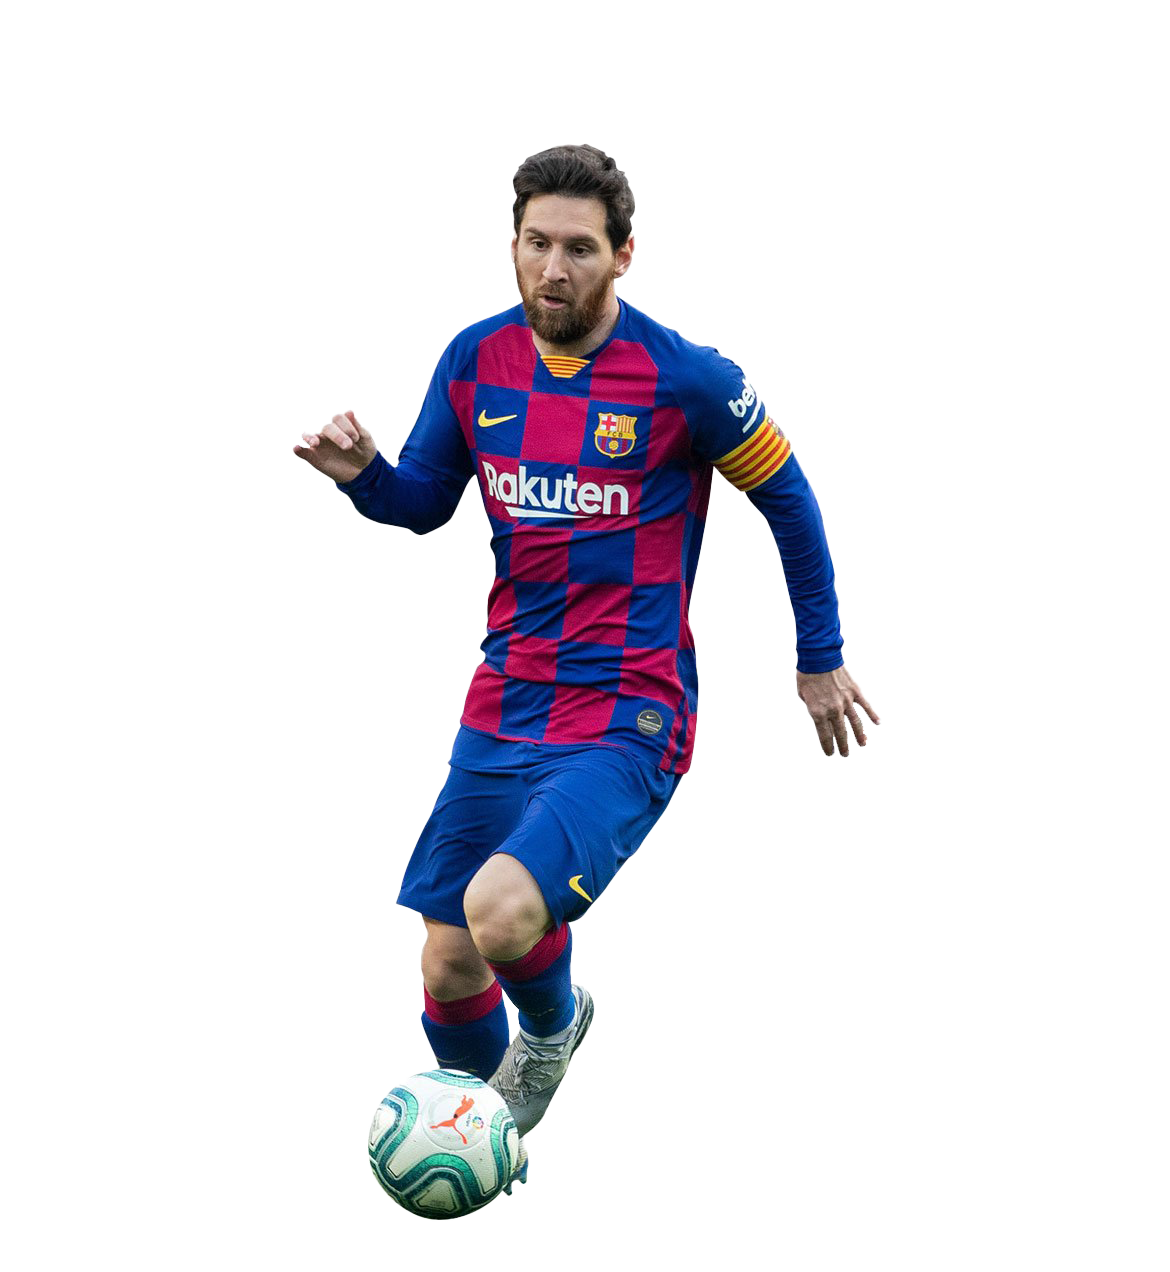 FC Barcelona Lionel Messi PNG Image HD